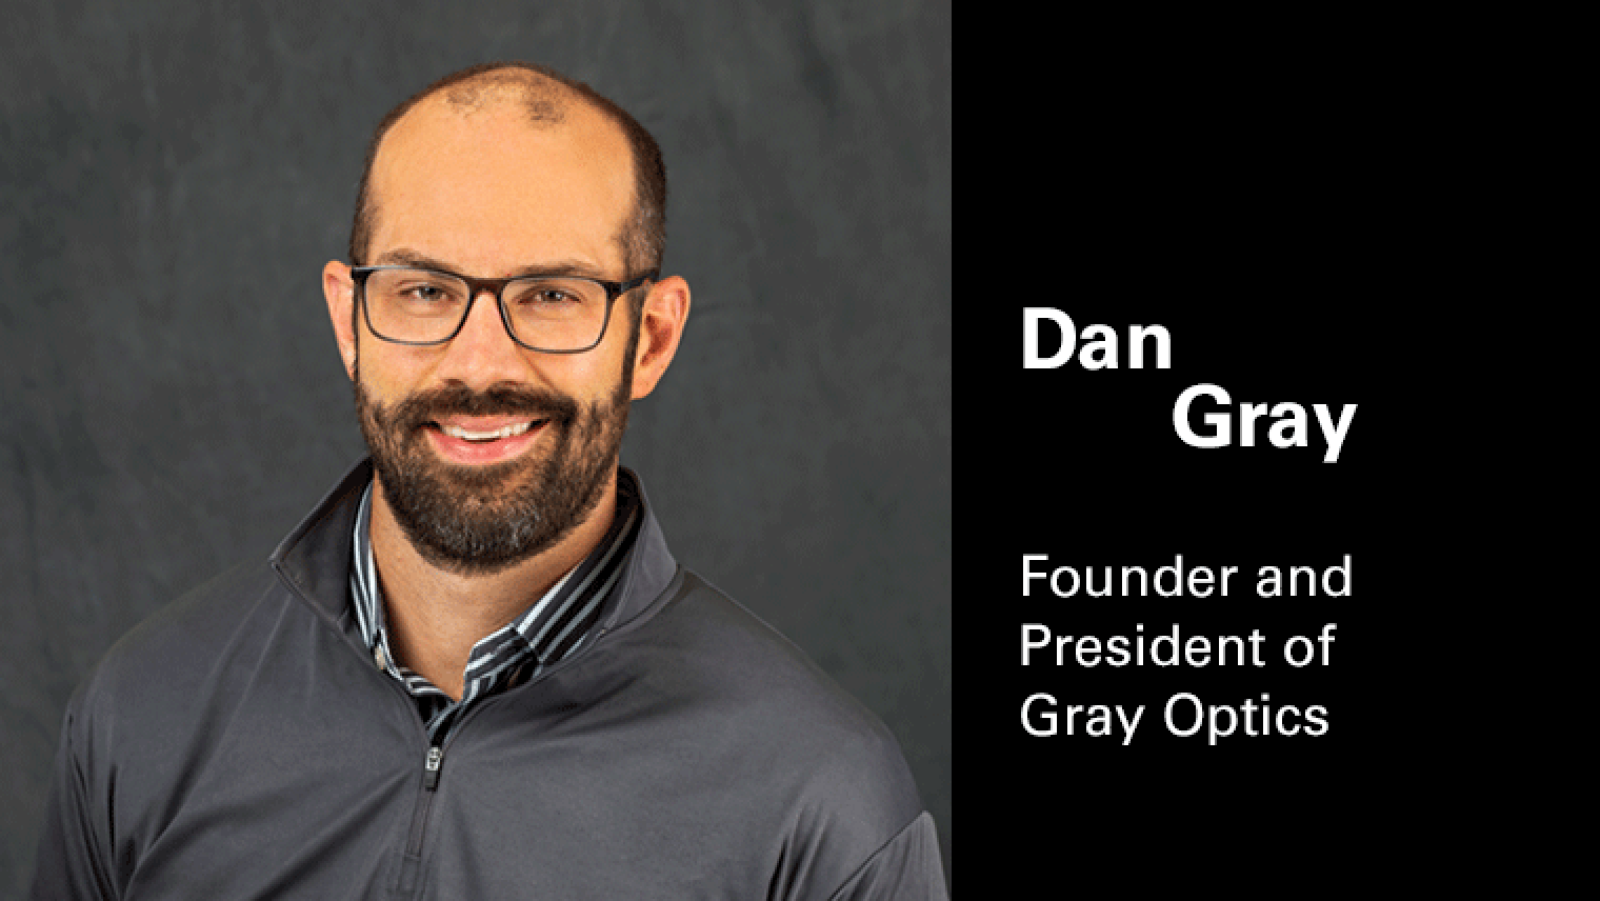 Dan Gray, Founder and President of Gray Optics